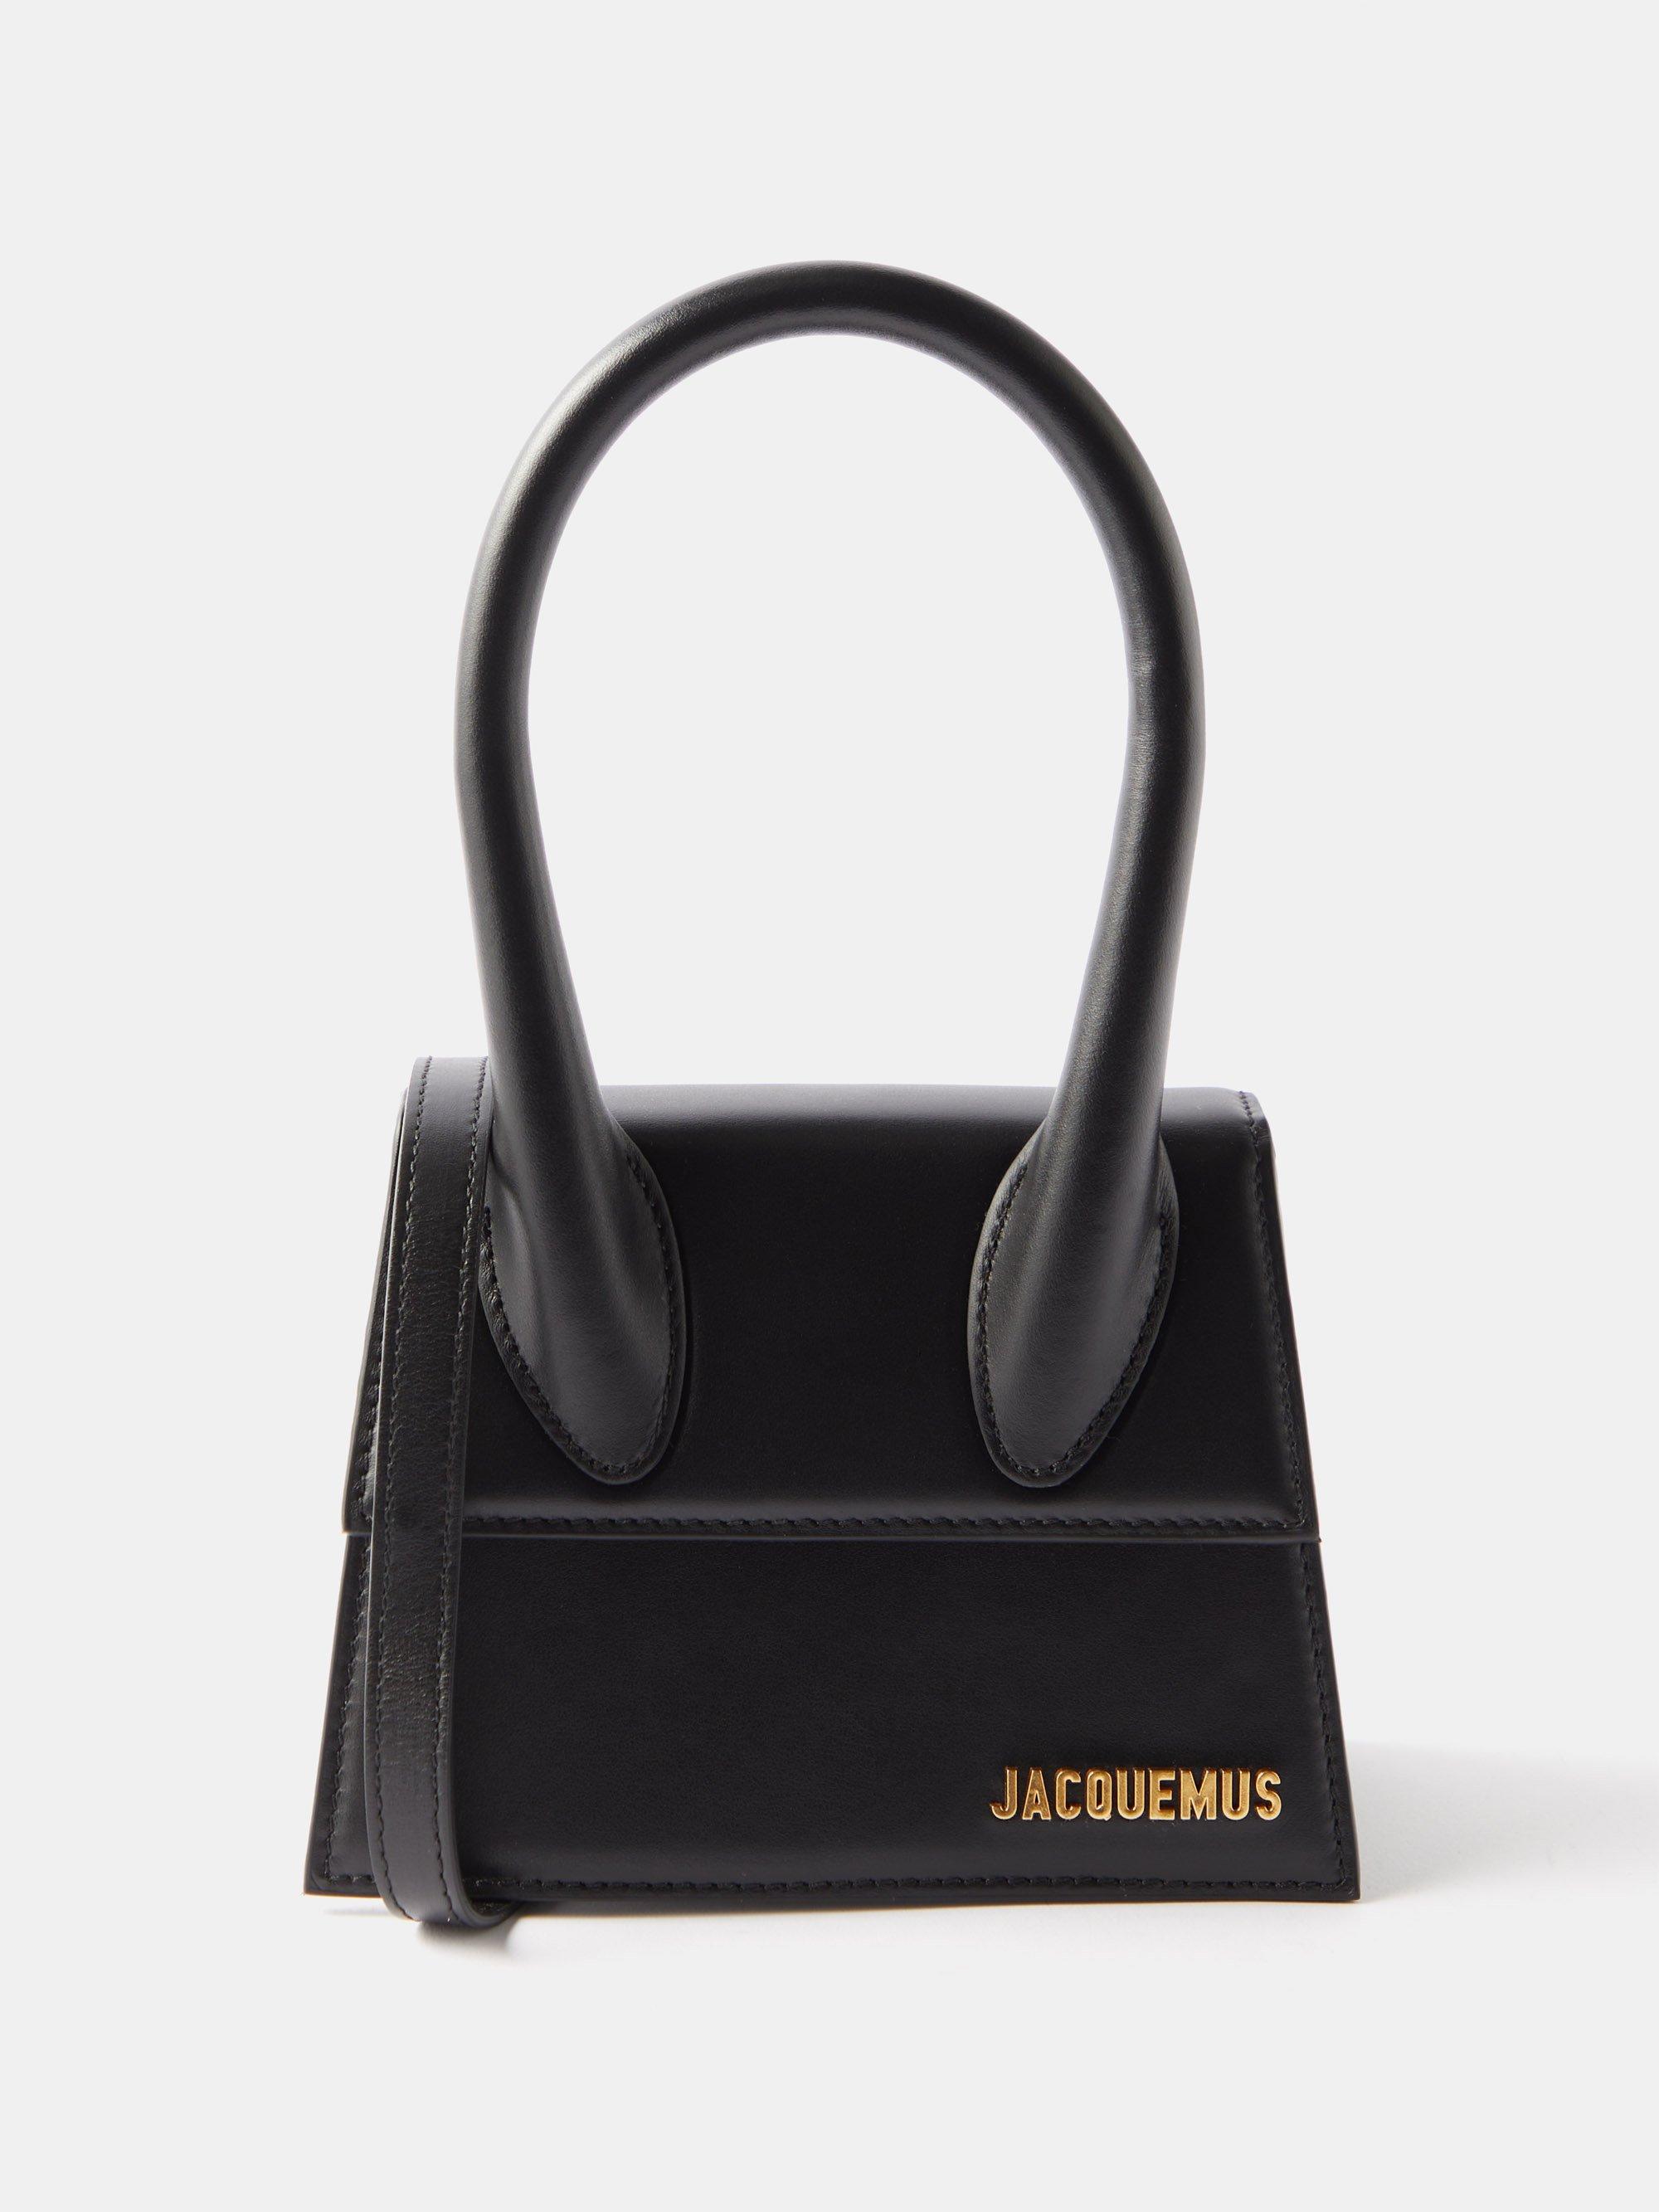 Jacquemus Chiquito Moyen Leather Handbag in Black | Lyst